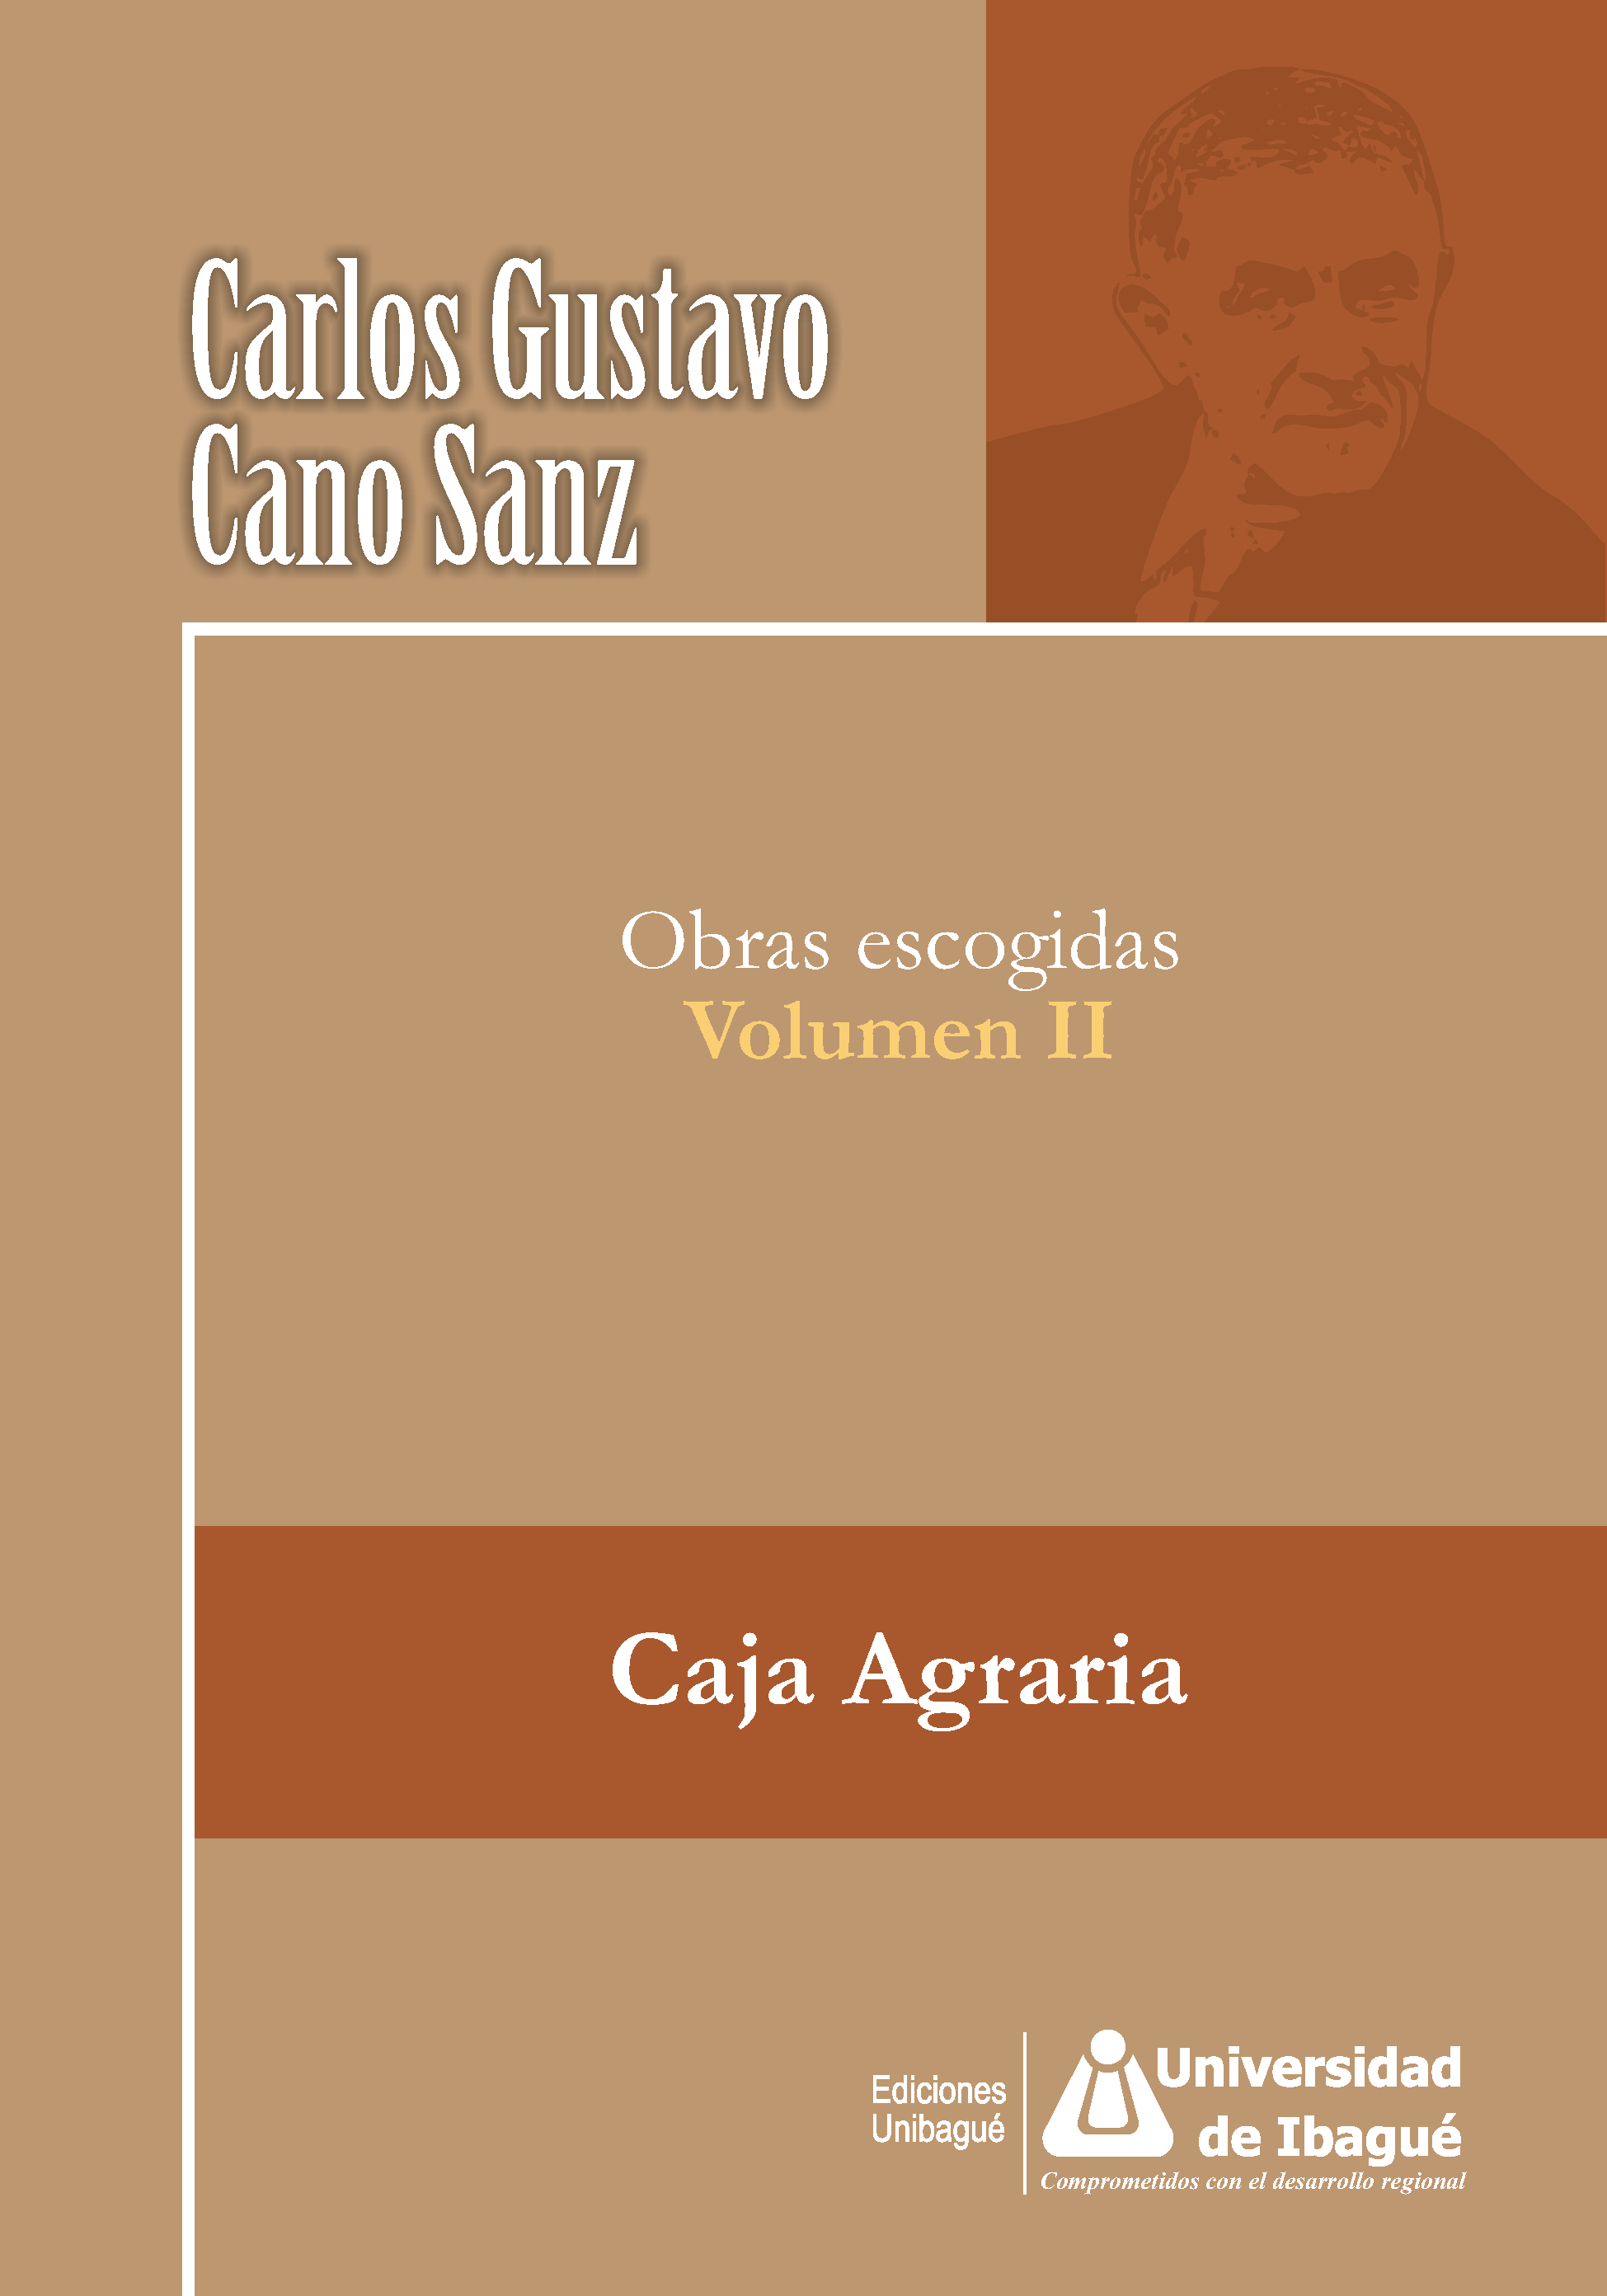 Cover of Caja Agraria